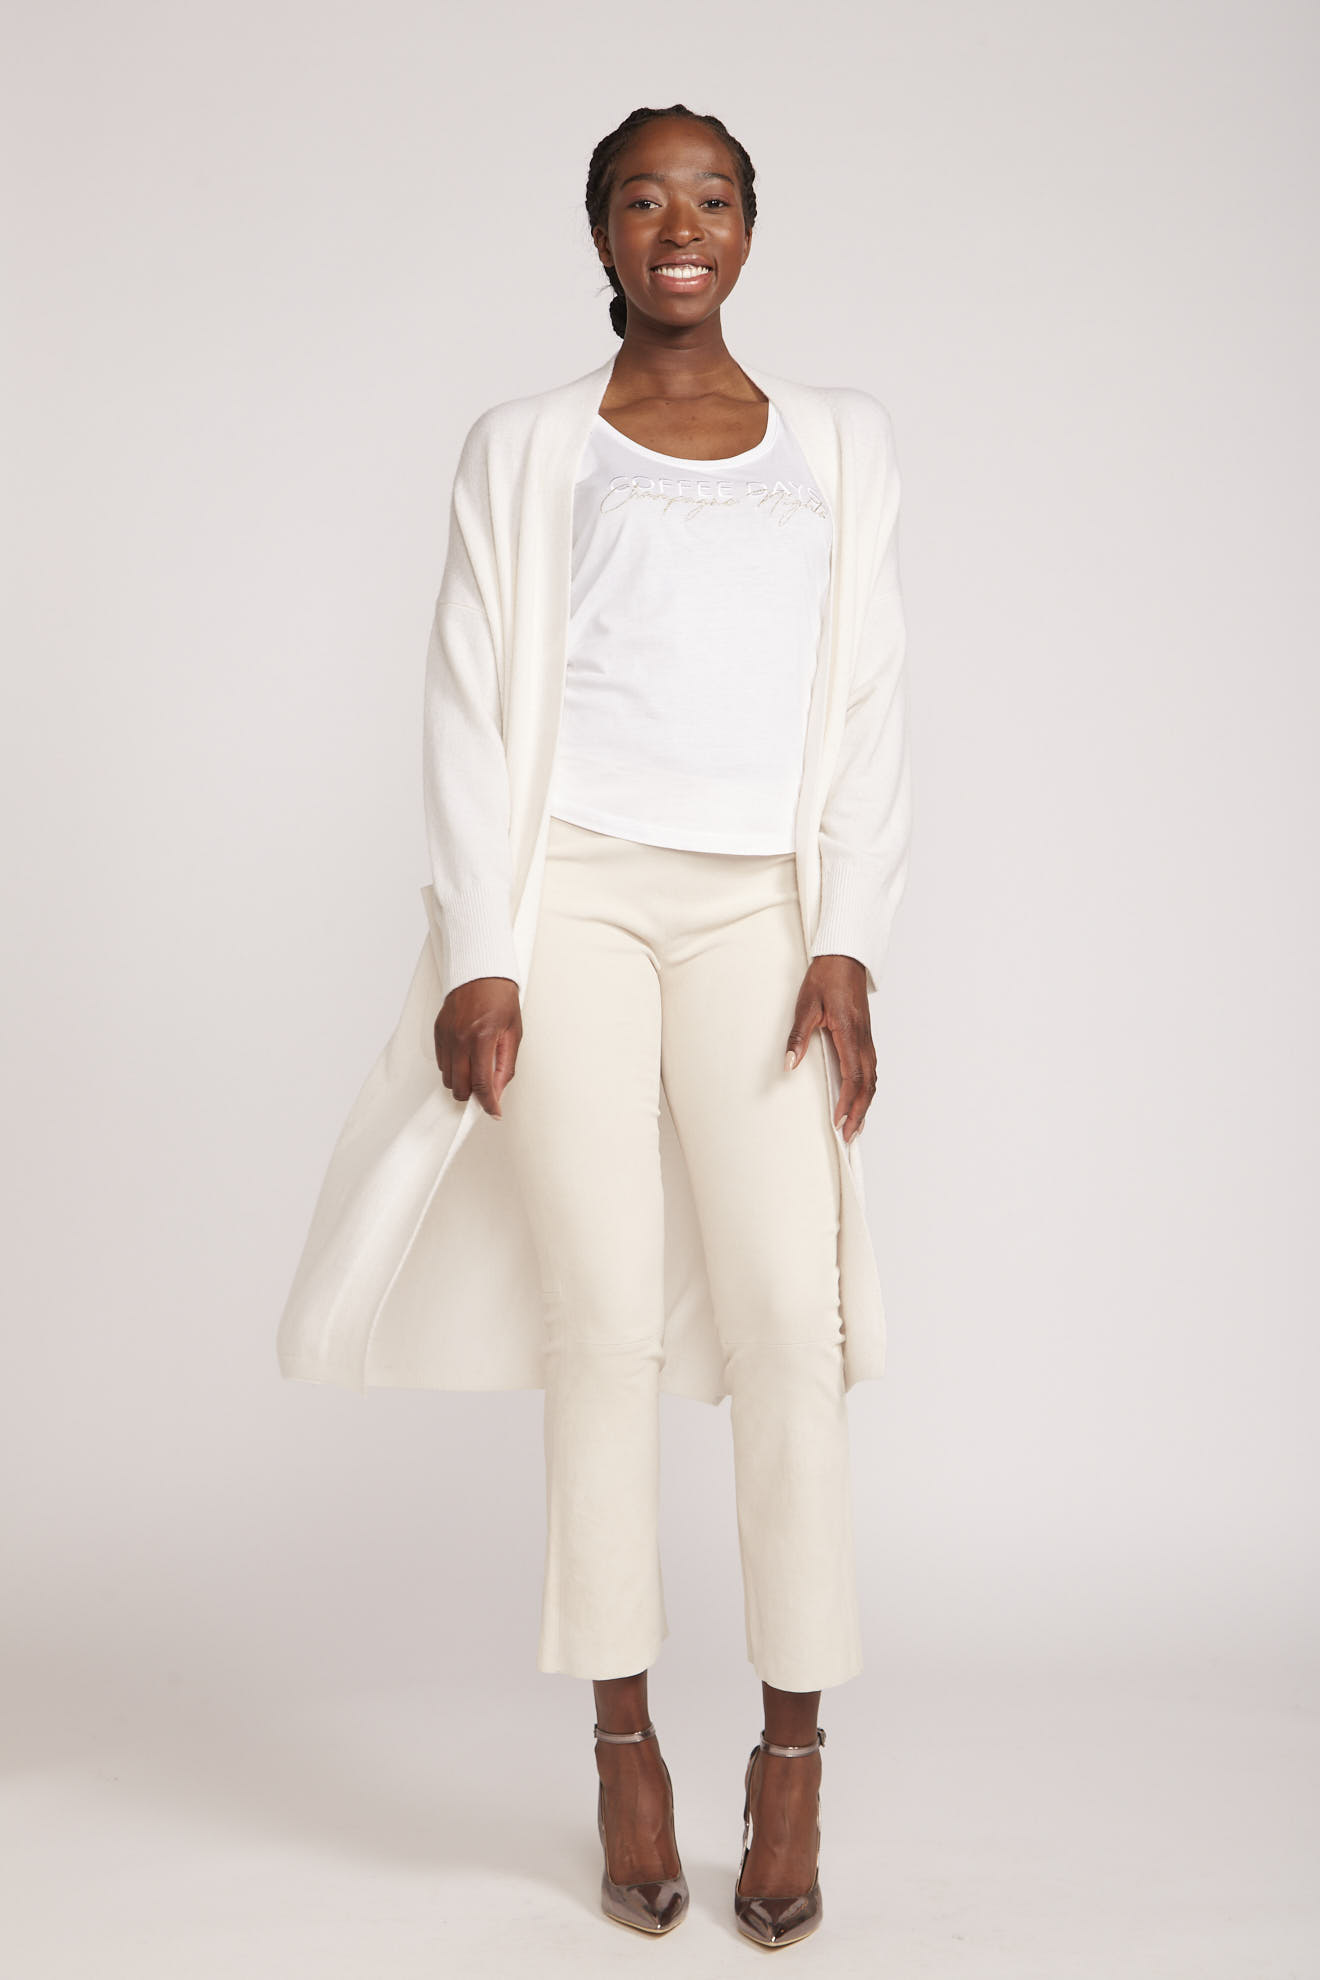 antonia zander coat white plain cashmere model style